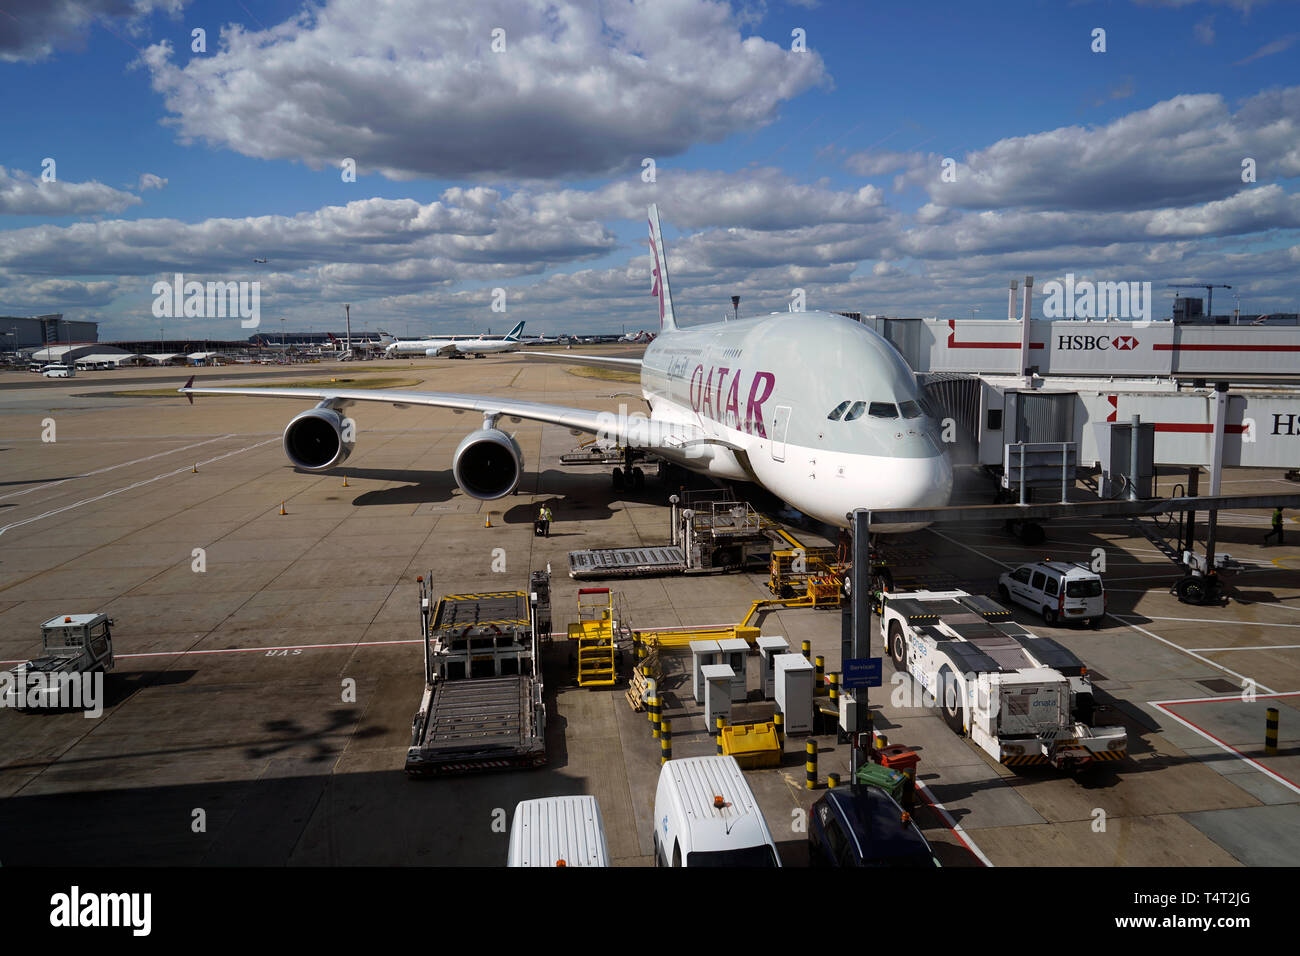 Qatar airline flight Stock Photo - Alamy